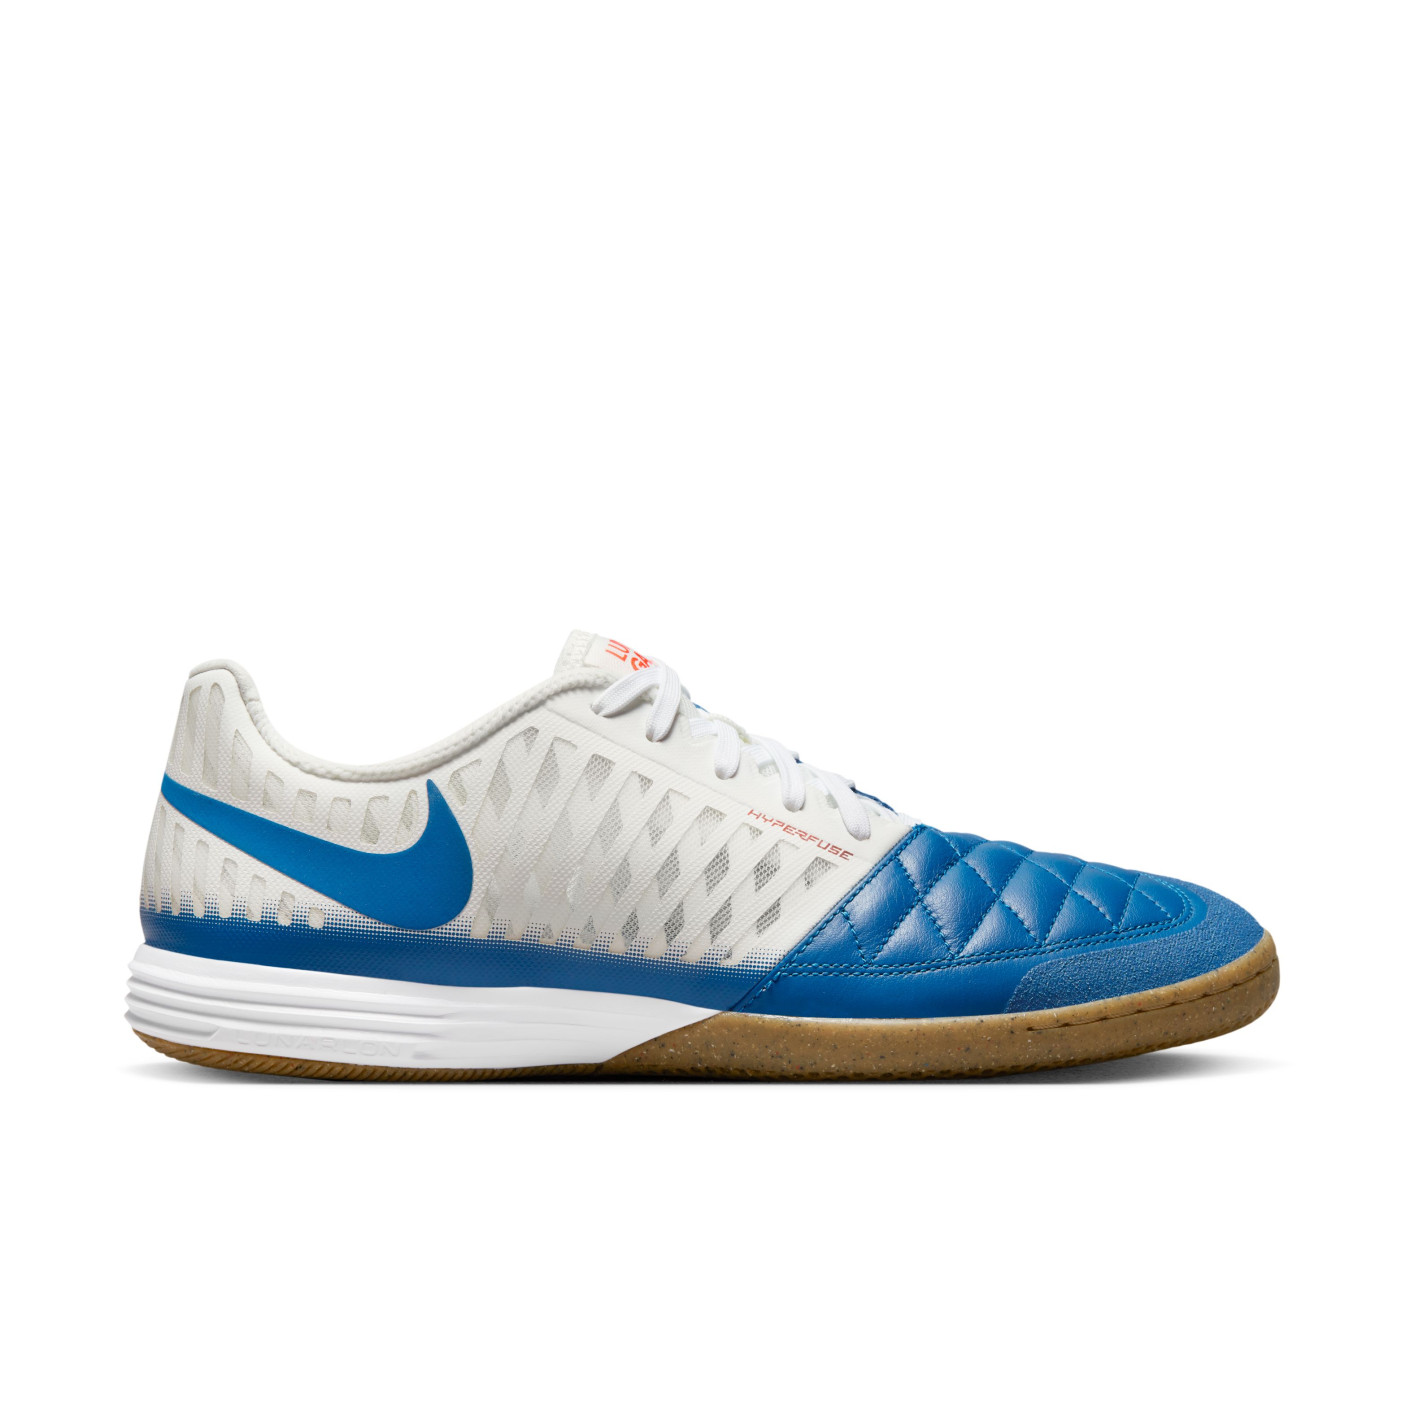 Nike Lunargato II Chaussures de Foot en Salle (IN) Blanc Bleu Brun